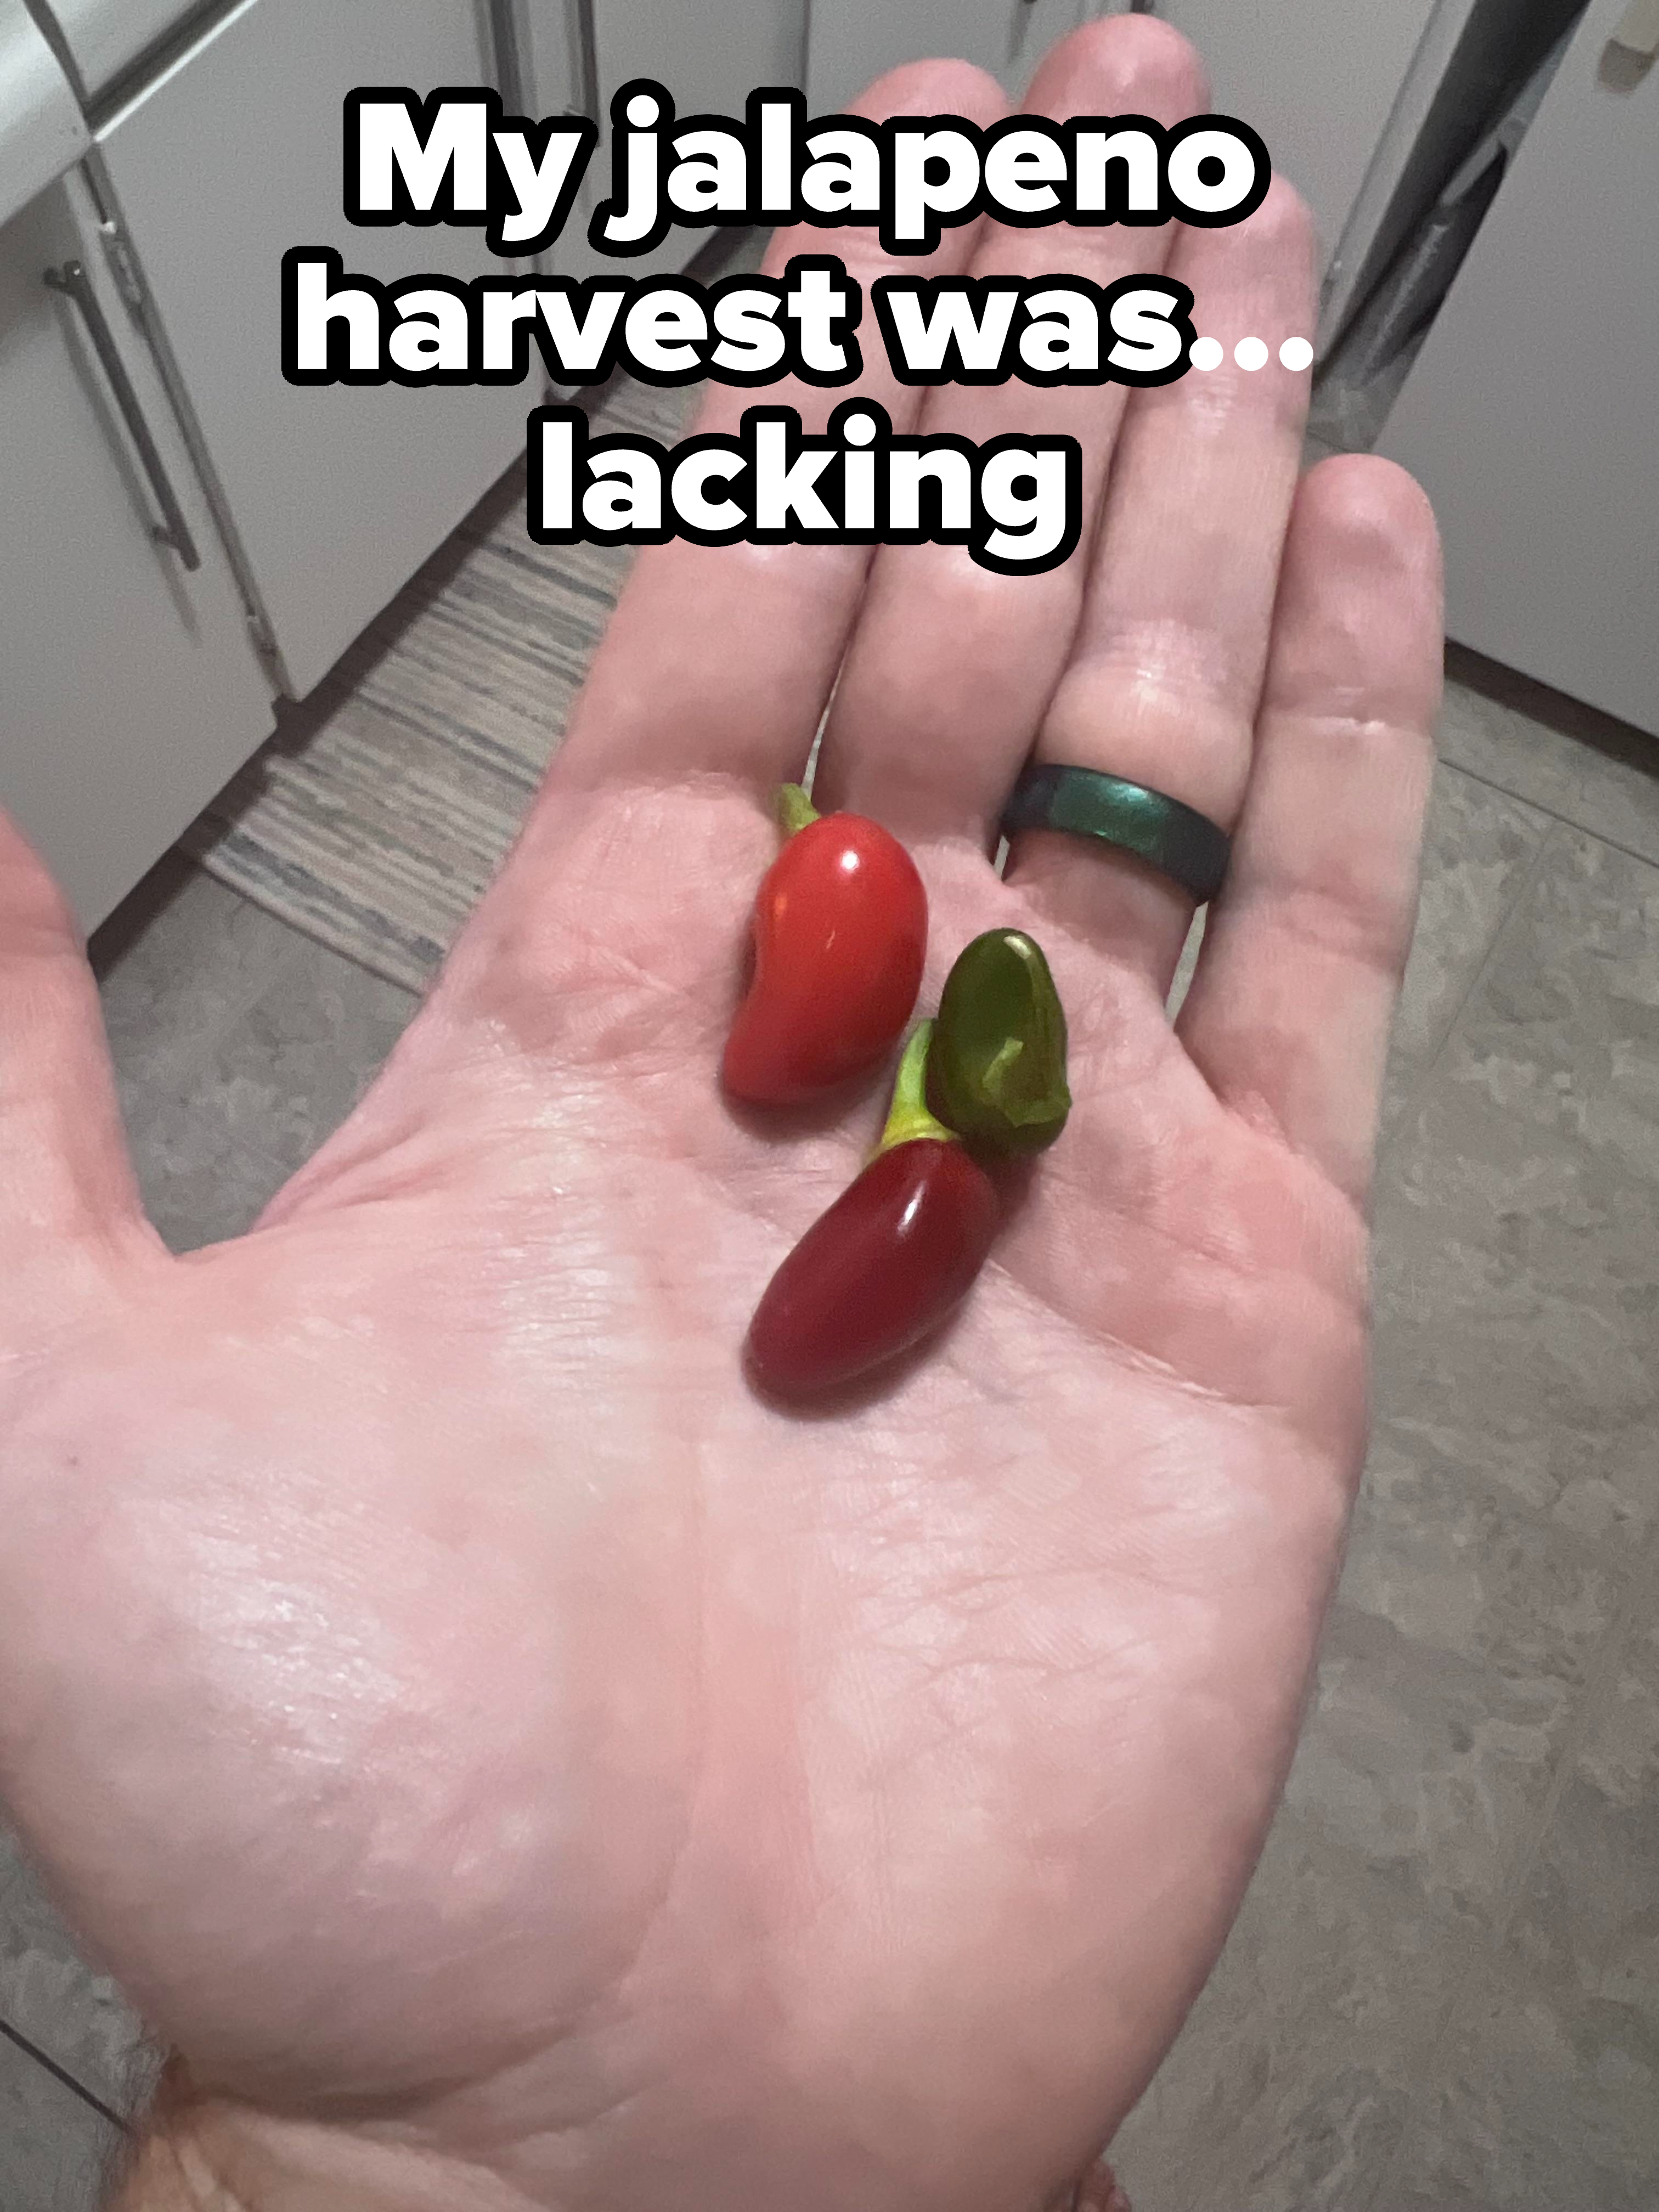 Someone's jalapeño harvest in their palm